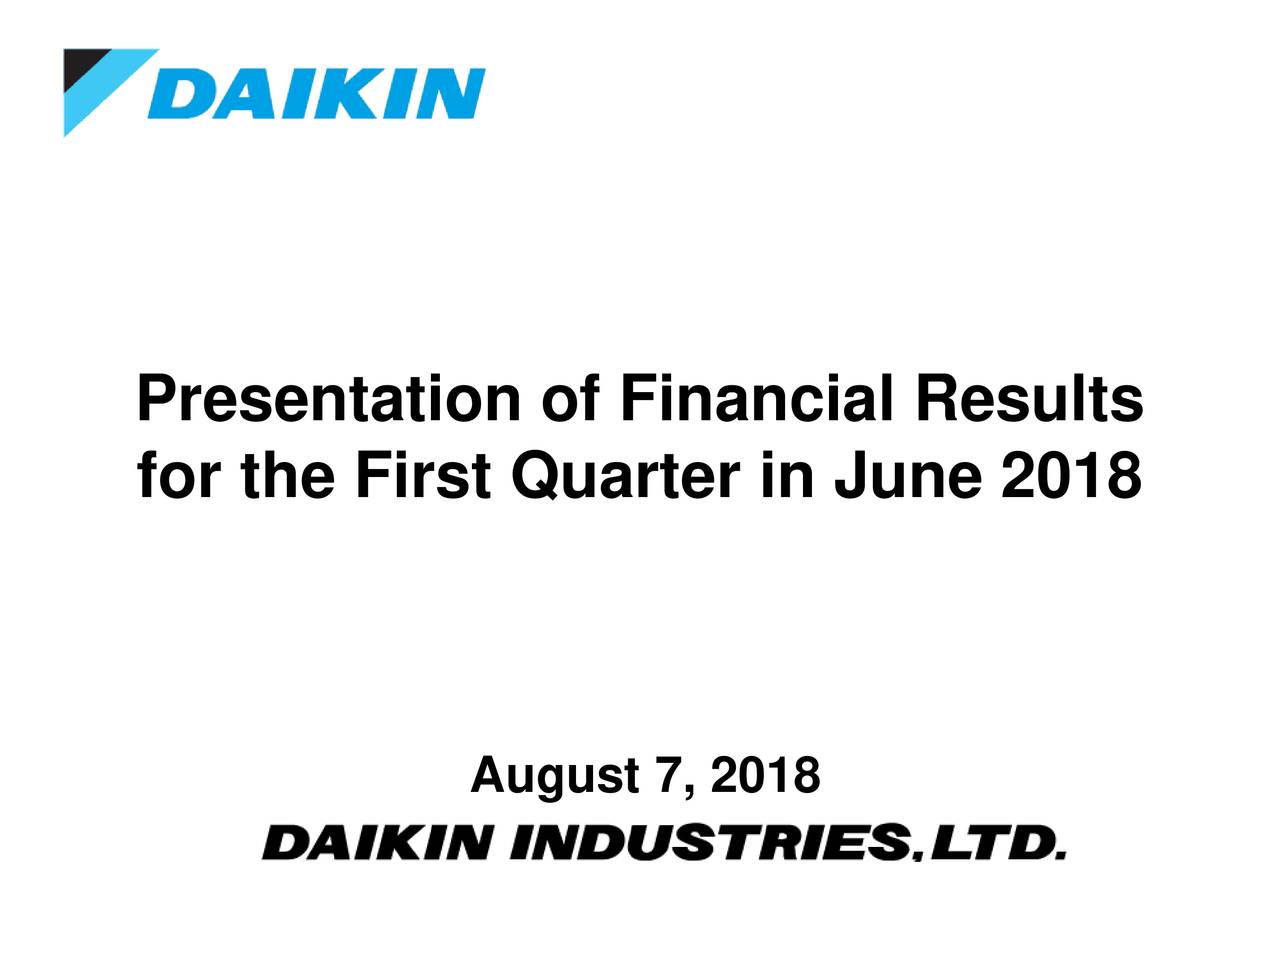 Daikin Financial Results